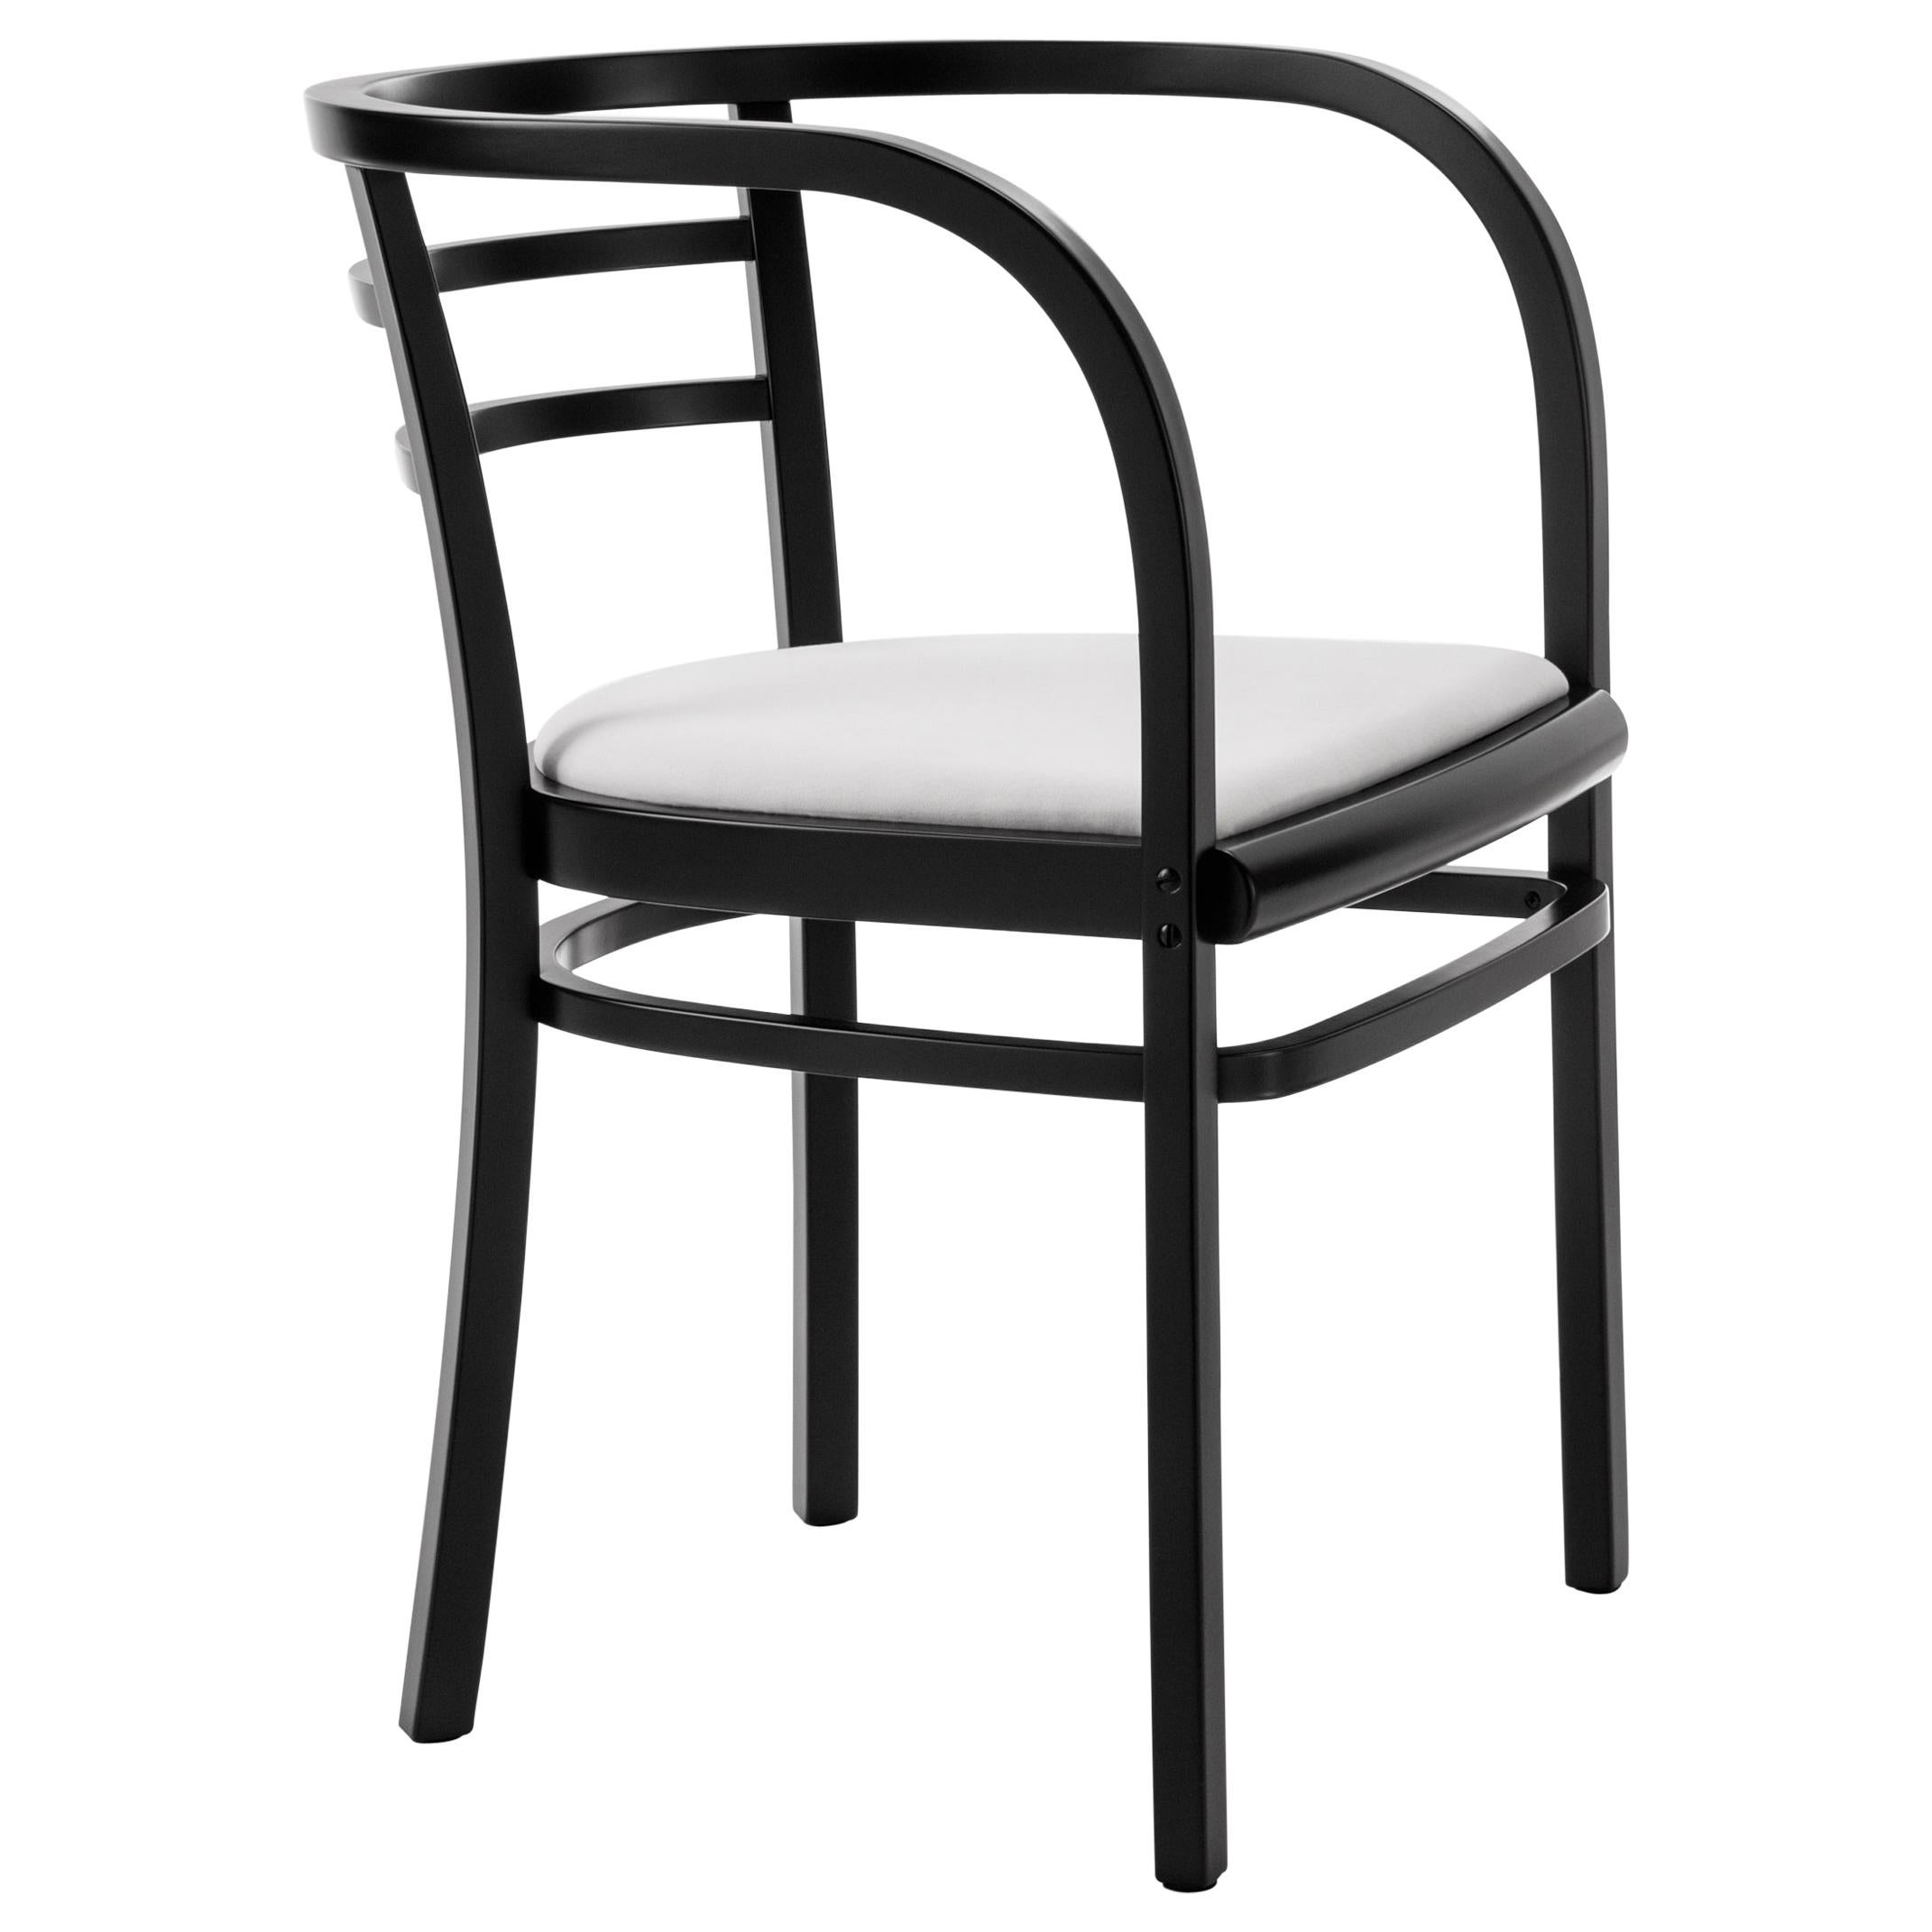 Gebrüder Thonet Vienna GmbH Postsparkasse Chair in Black and Upholstered Seat For Sale